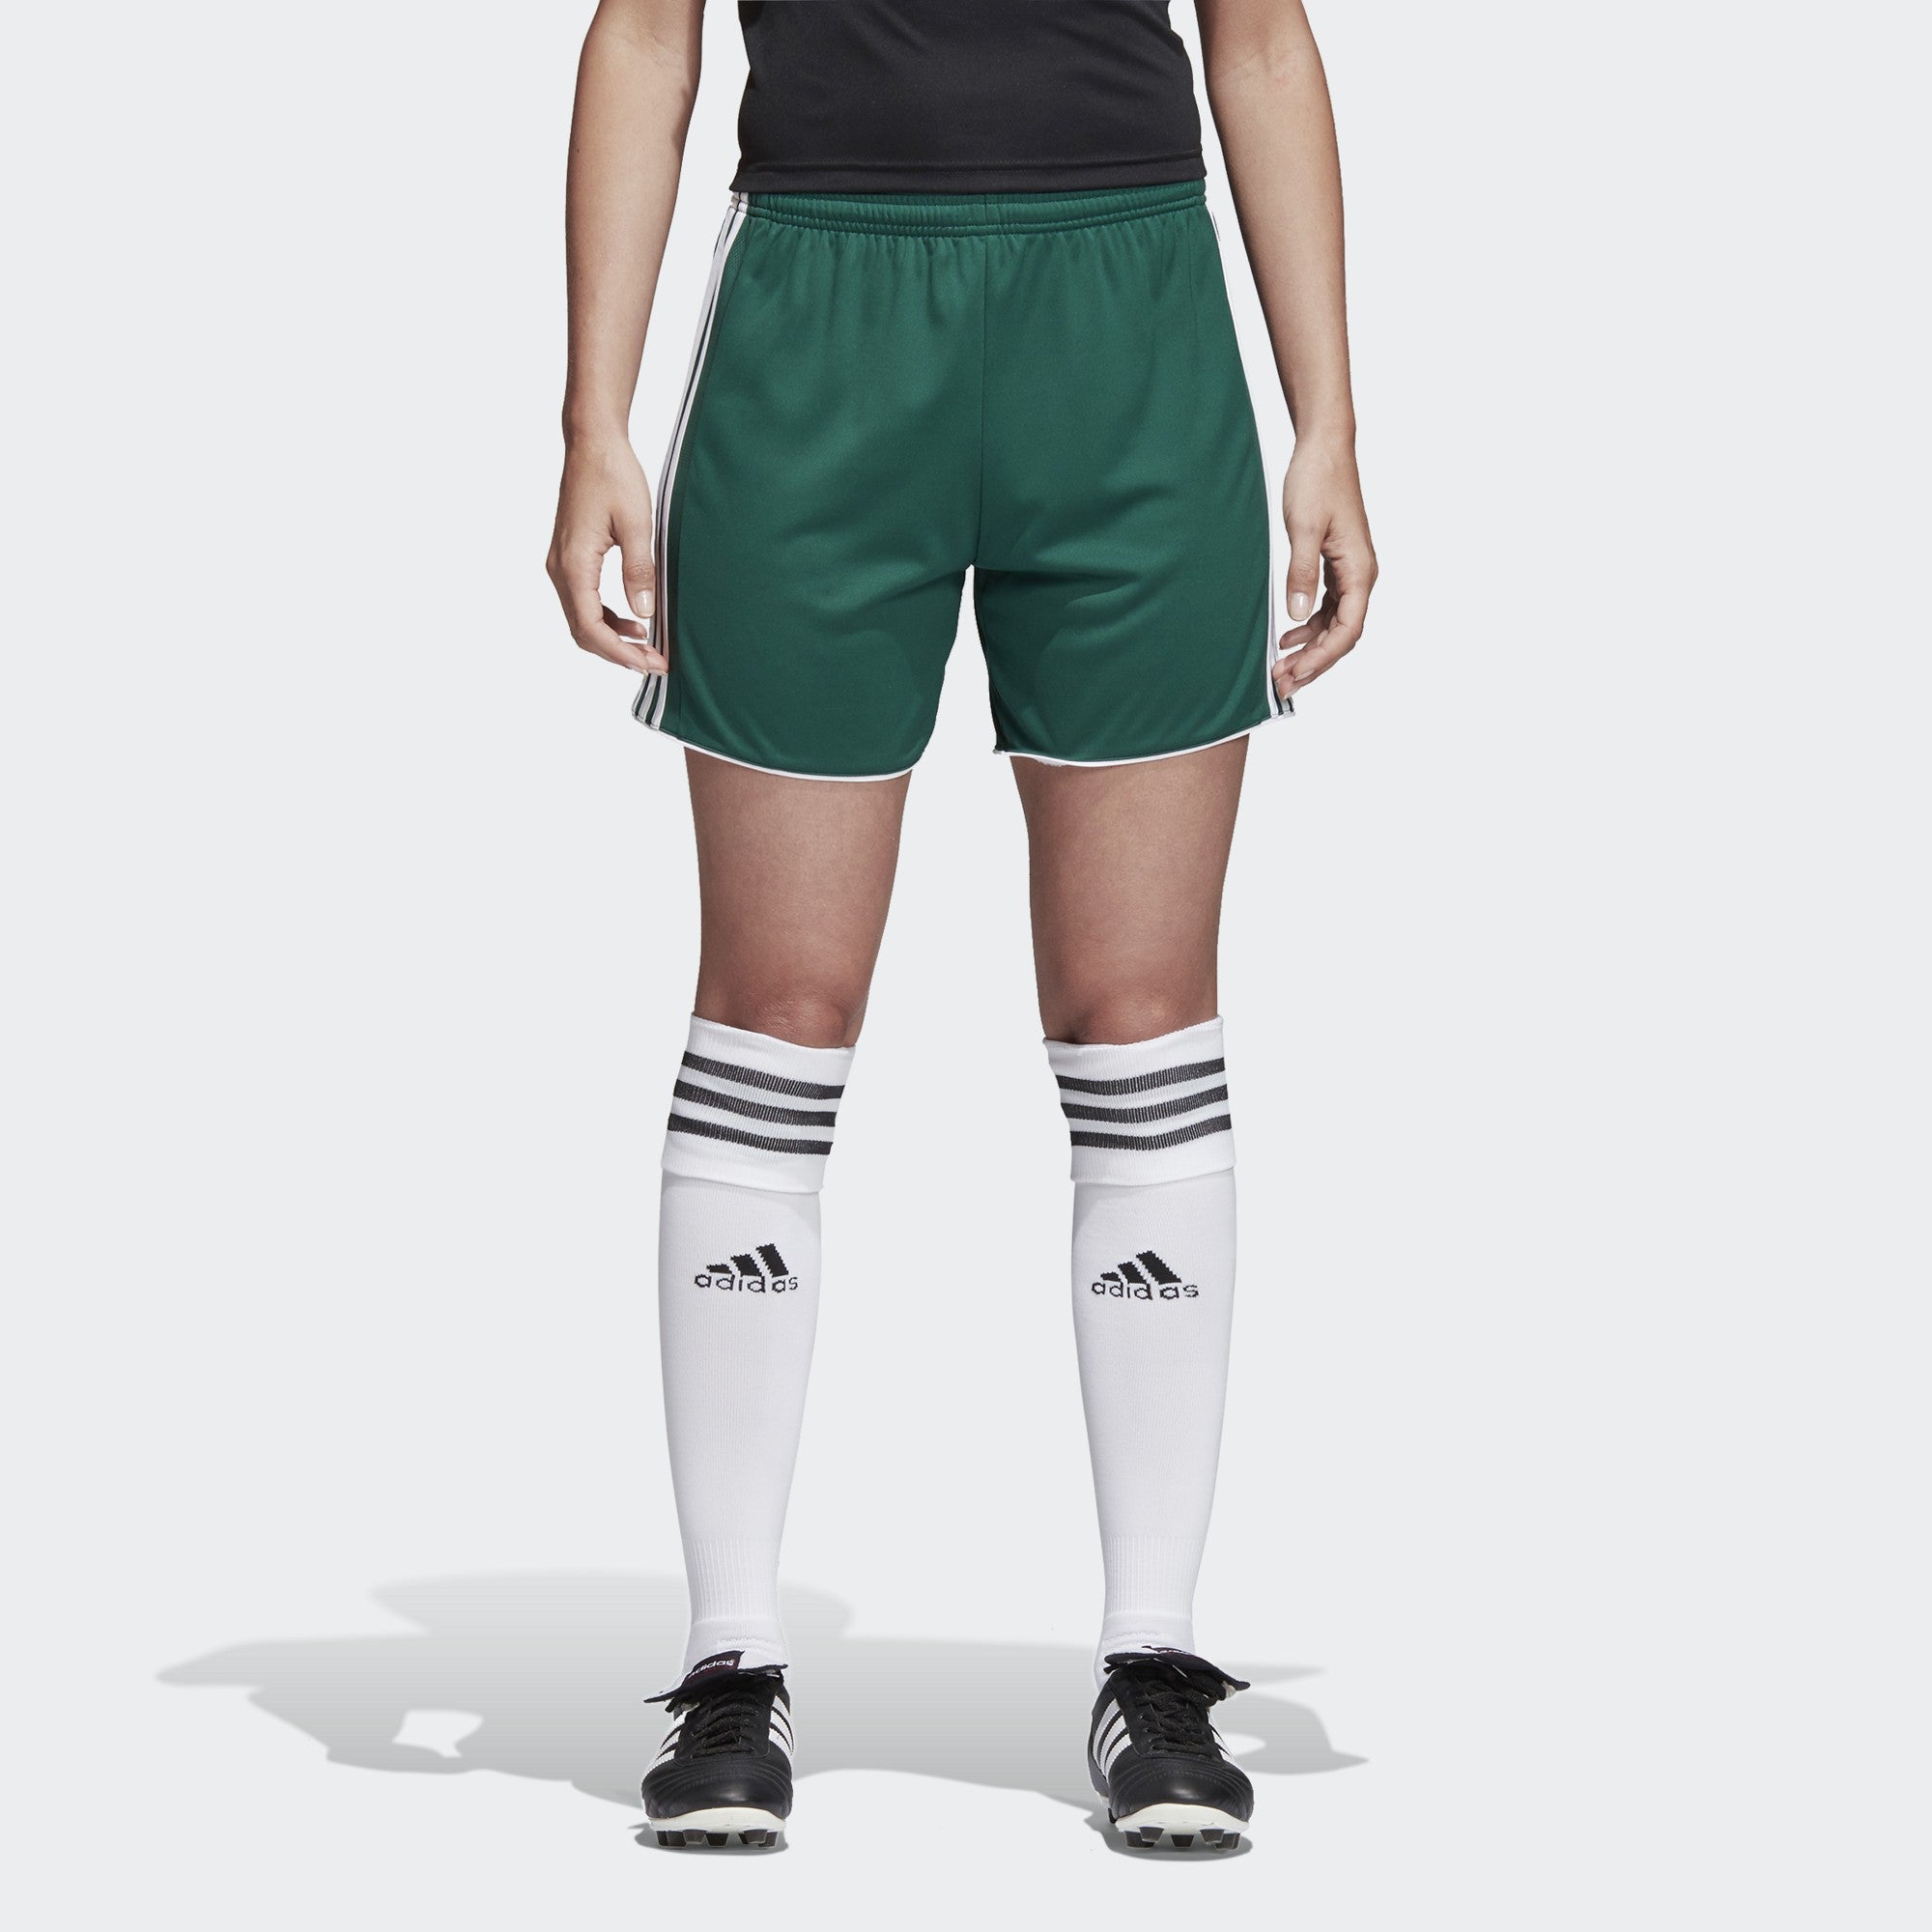 Omitido Ordenado Murciélago Women's Tastigo 17 Shorts - Collegiate Green/White